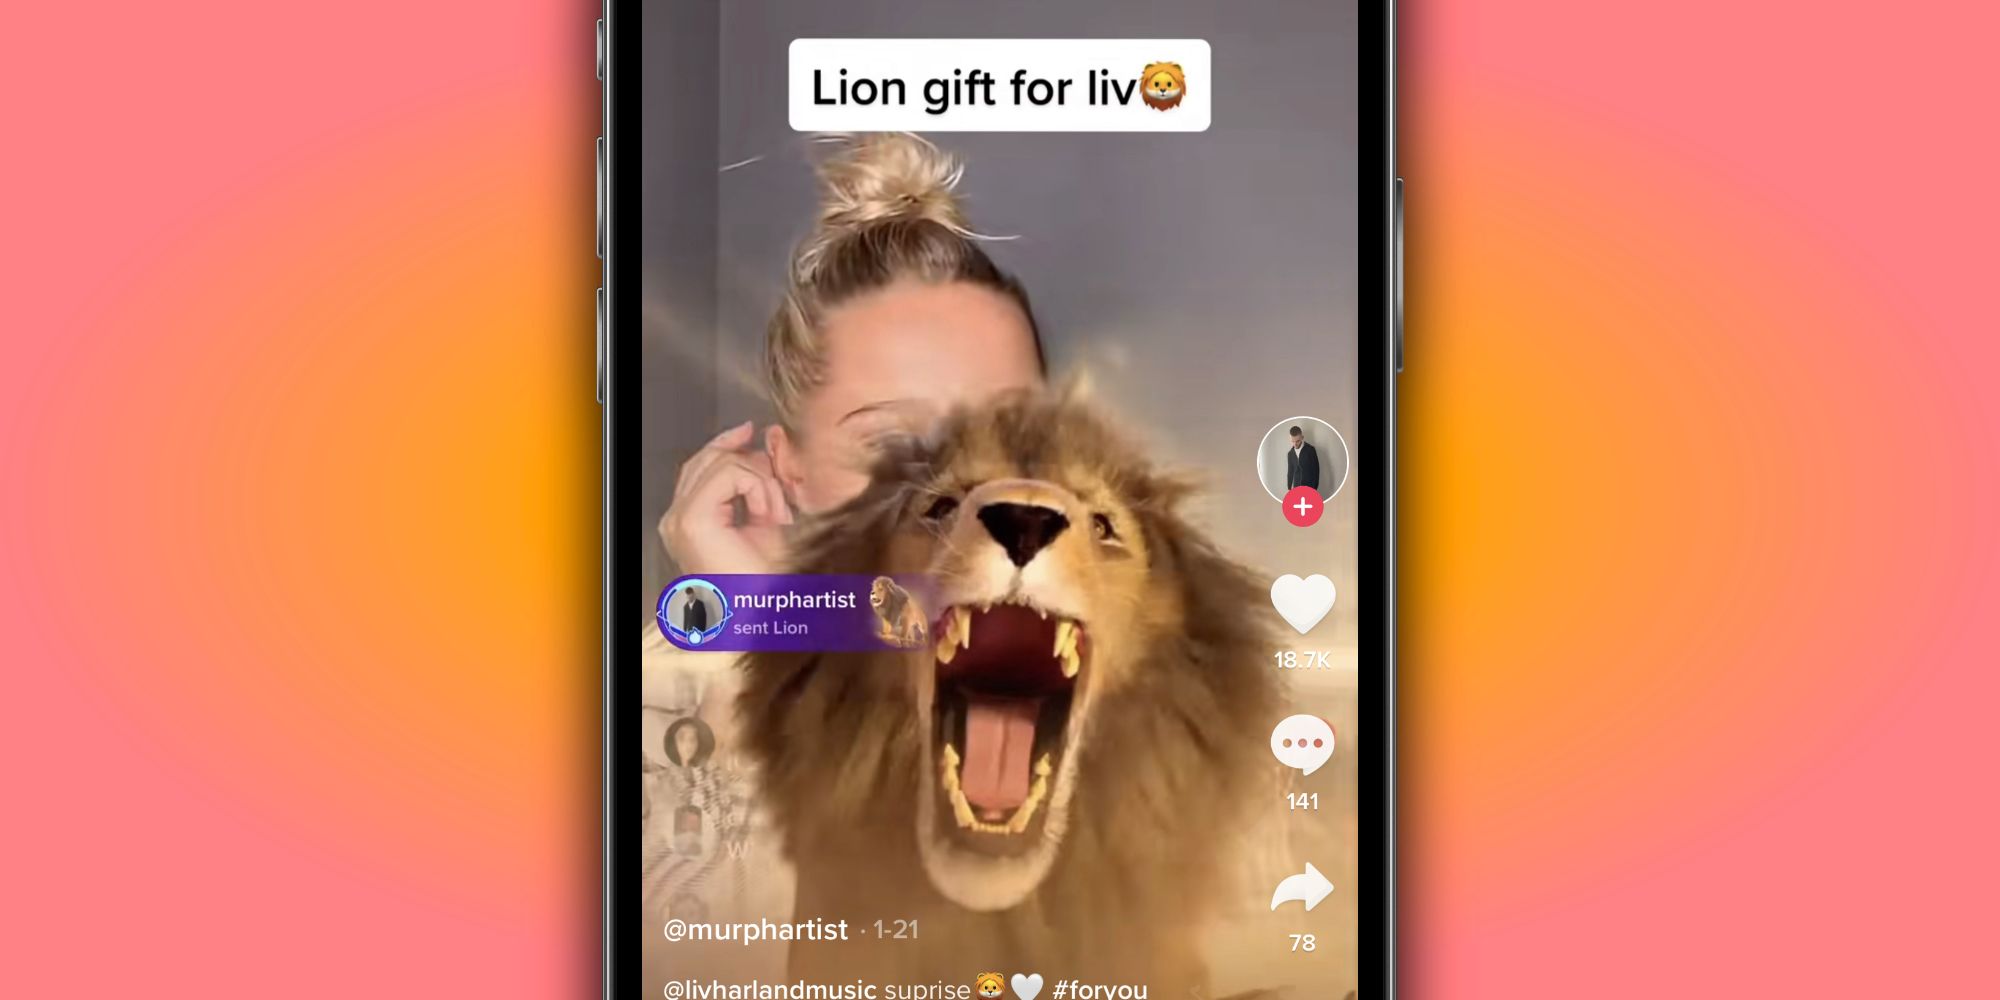 The Lion gift on TikTok Live